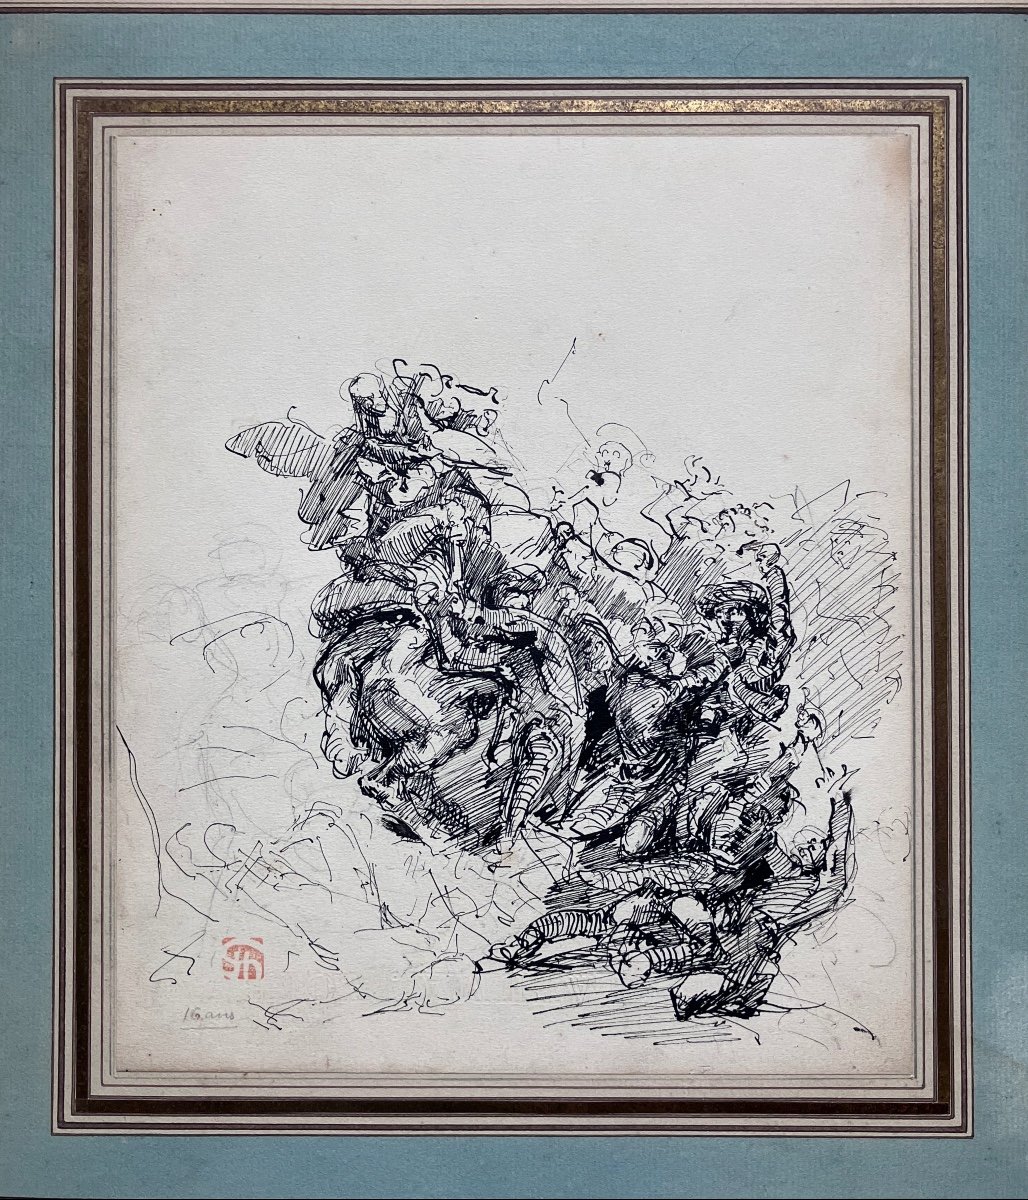 Drawing Ink And Pencil Jules Chadel (1870-1941)